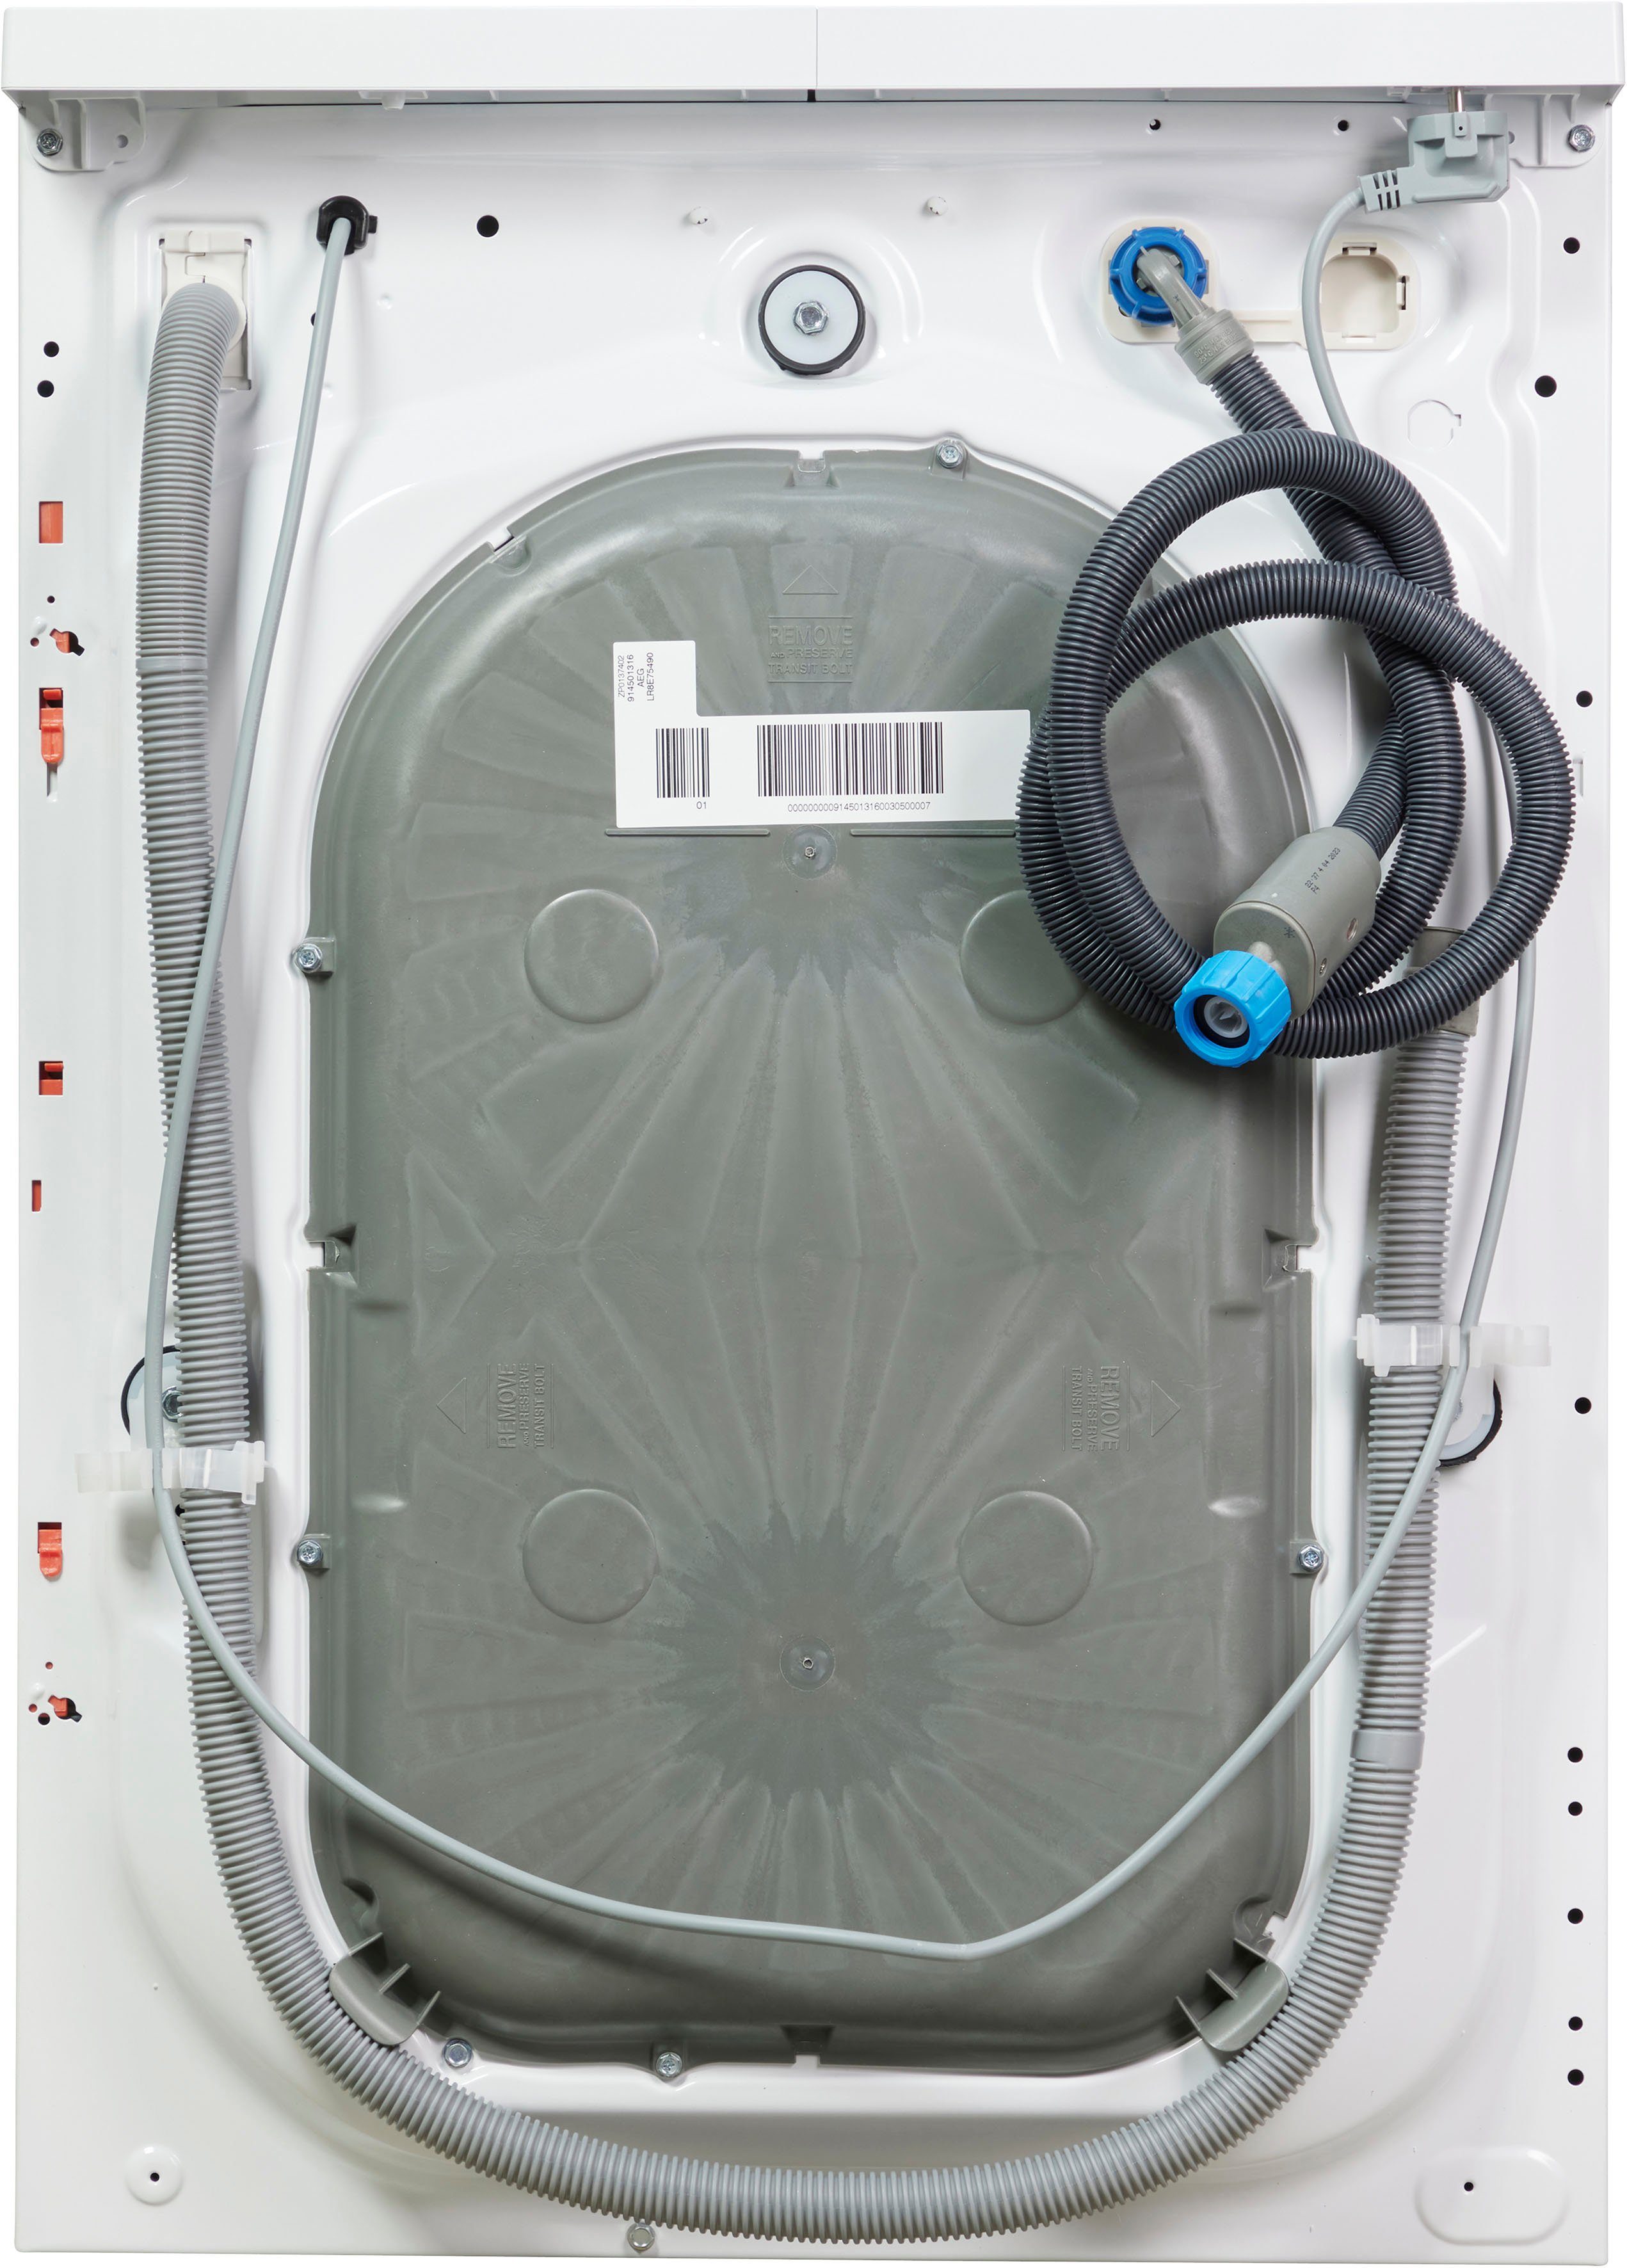 AEG Waschmaschine 8000 PowerCare LR8E75490, - in 1400 9 Min. 59 U/min, Wifi kg, PowerClean & 30 nur Fleckenentfernung °C bei